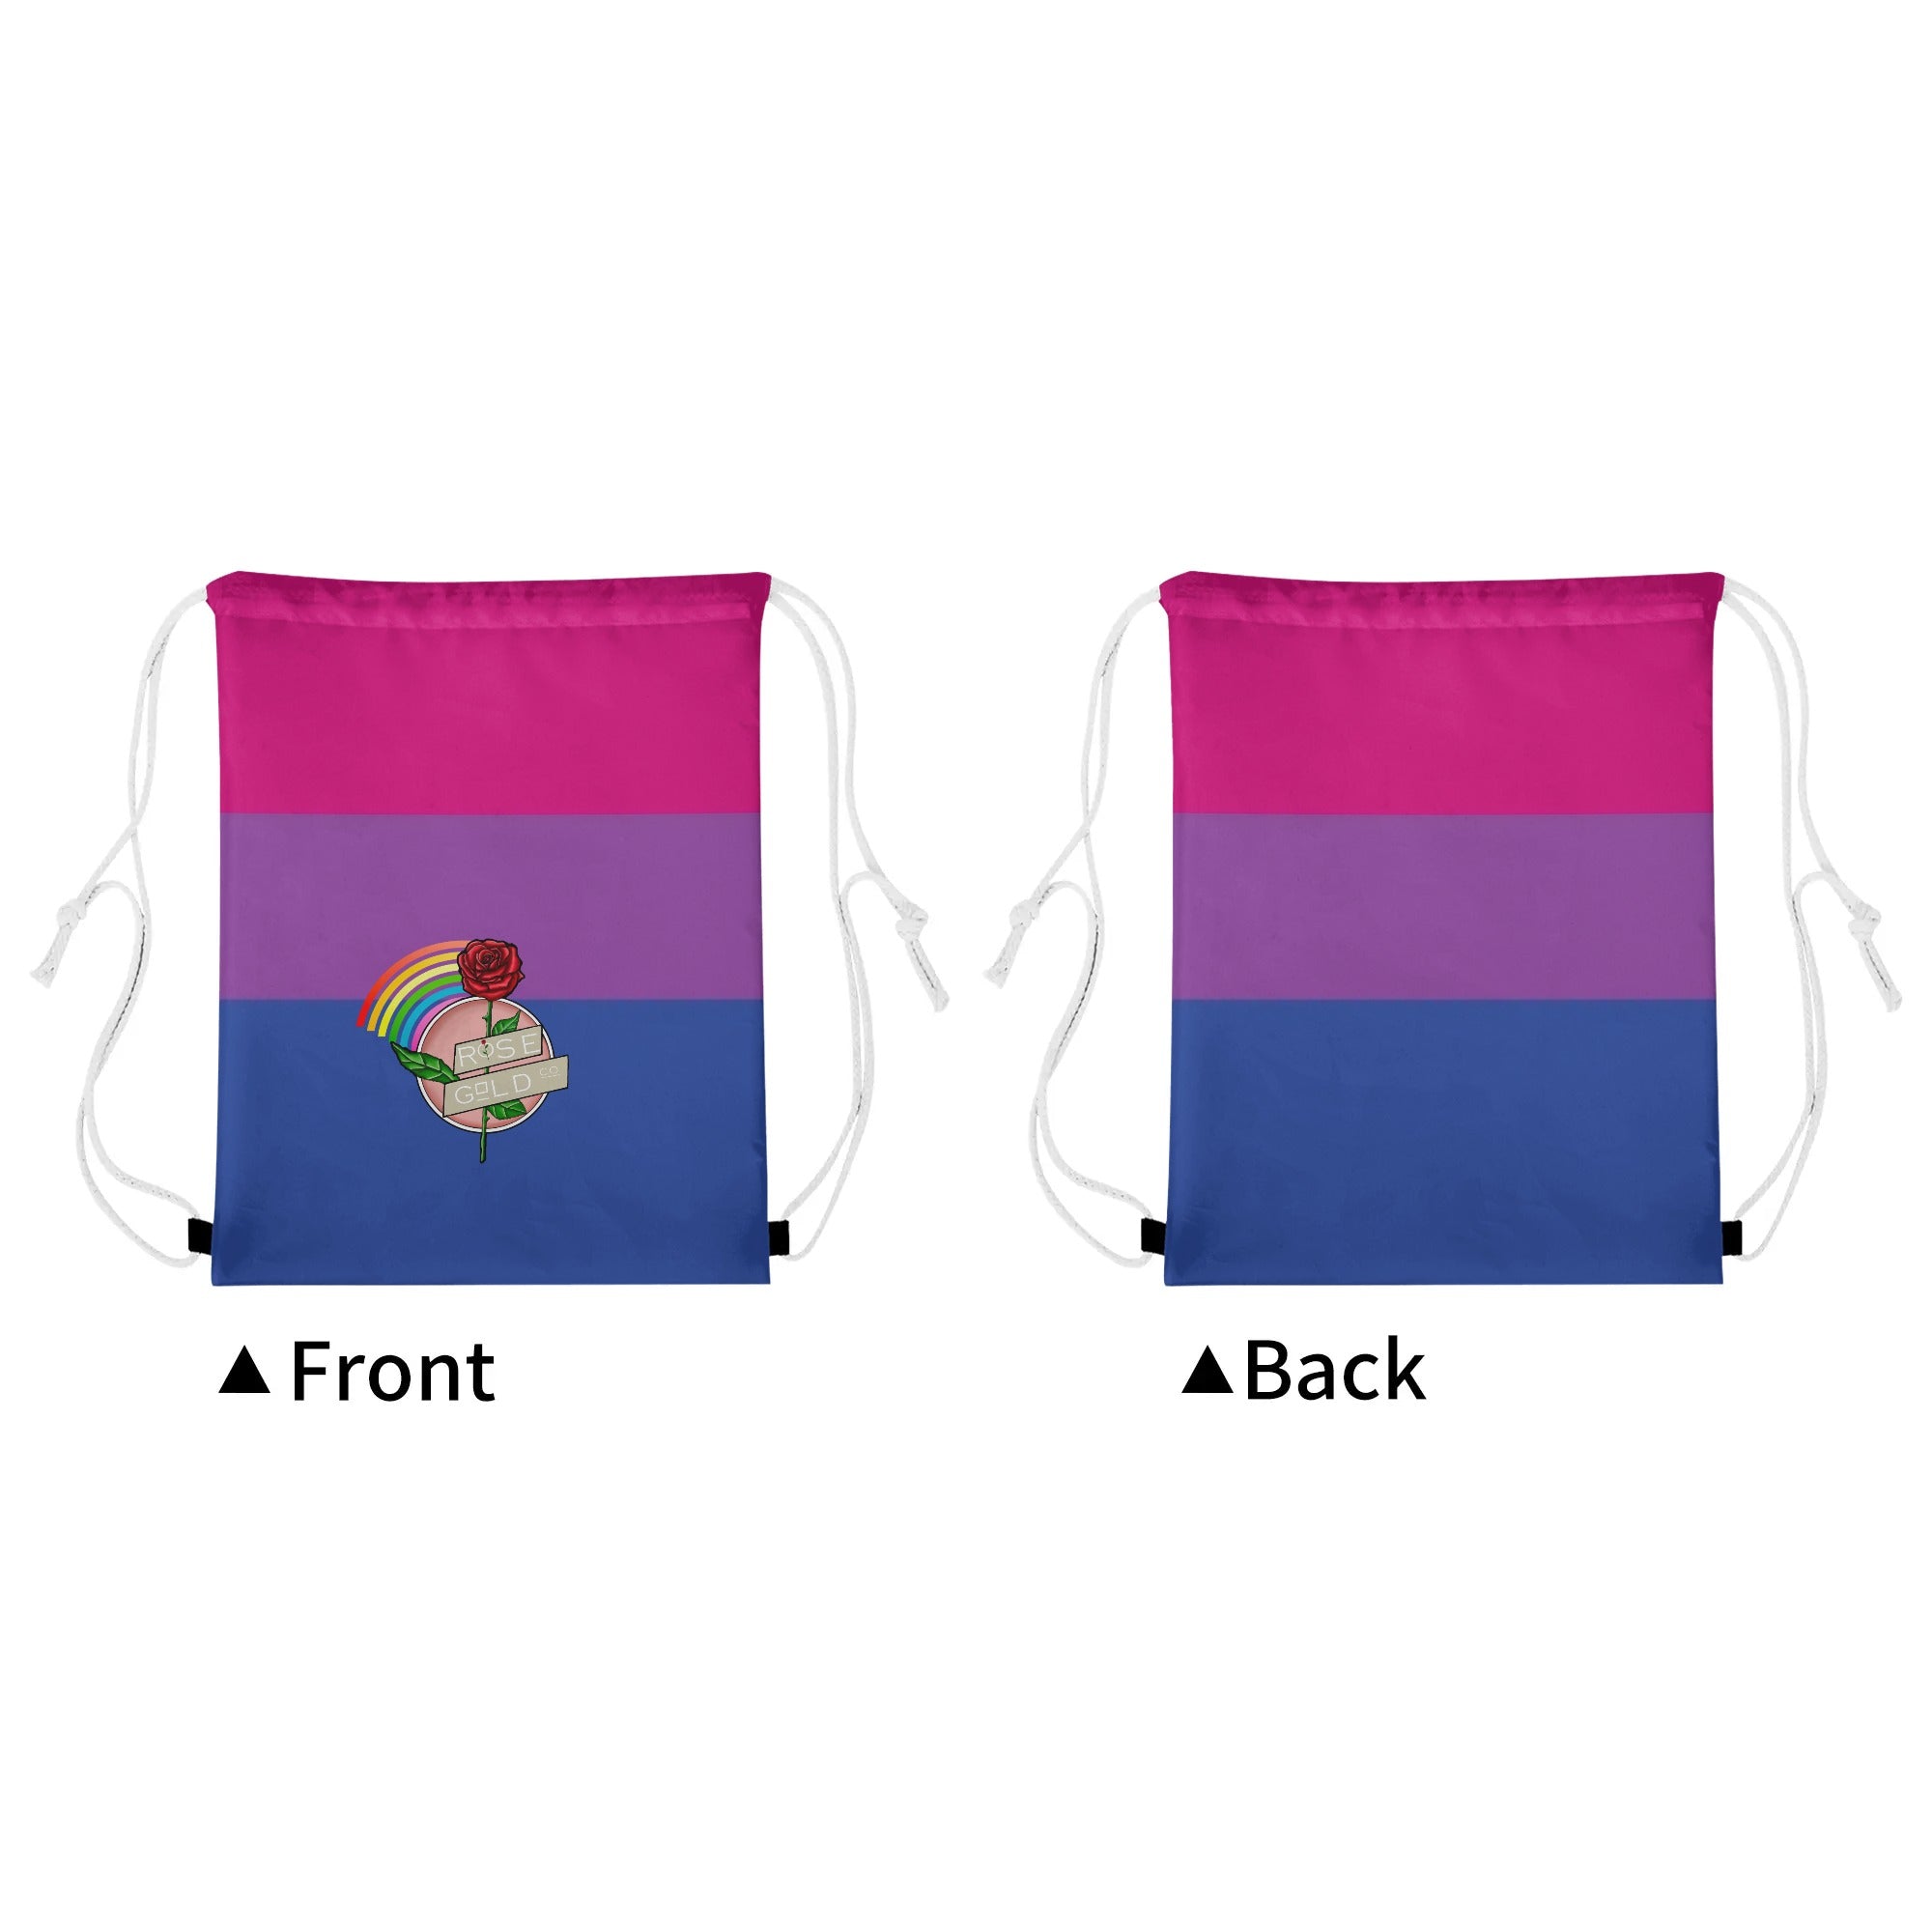 Bisexual Pride Drawstring Bag - Rose Gold Co. Shop